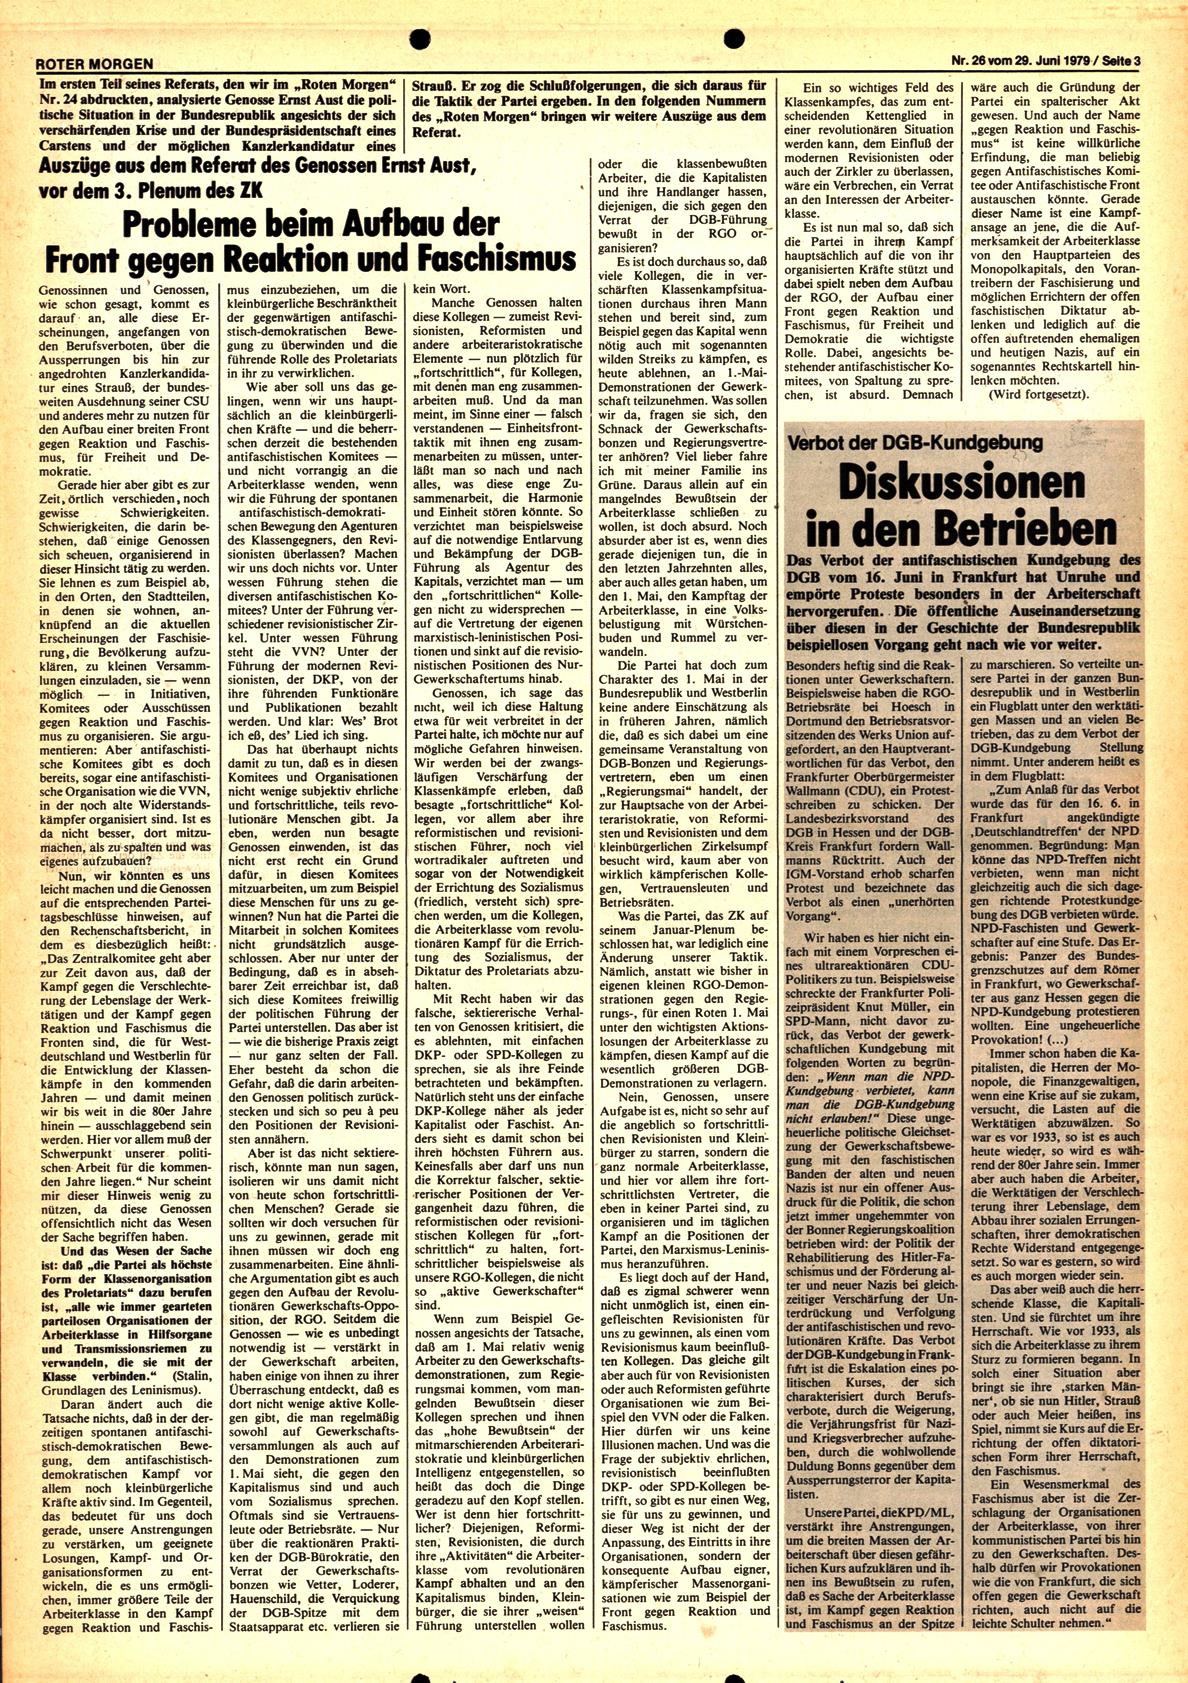 Roter Morgen, 13. Jg., 29. Juni 1979, Nr. 26, Seite 3